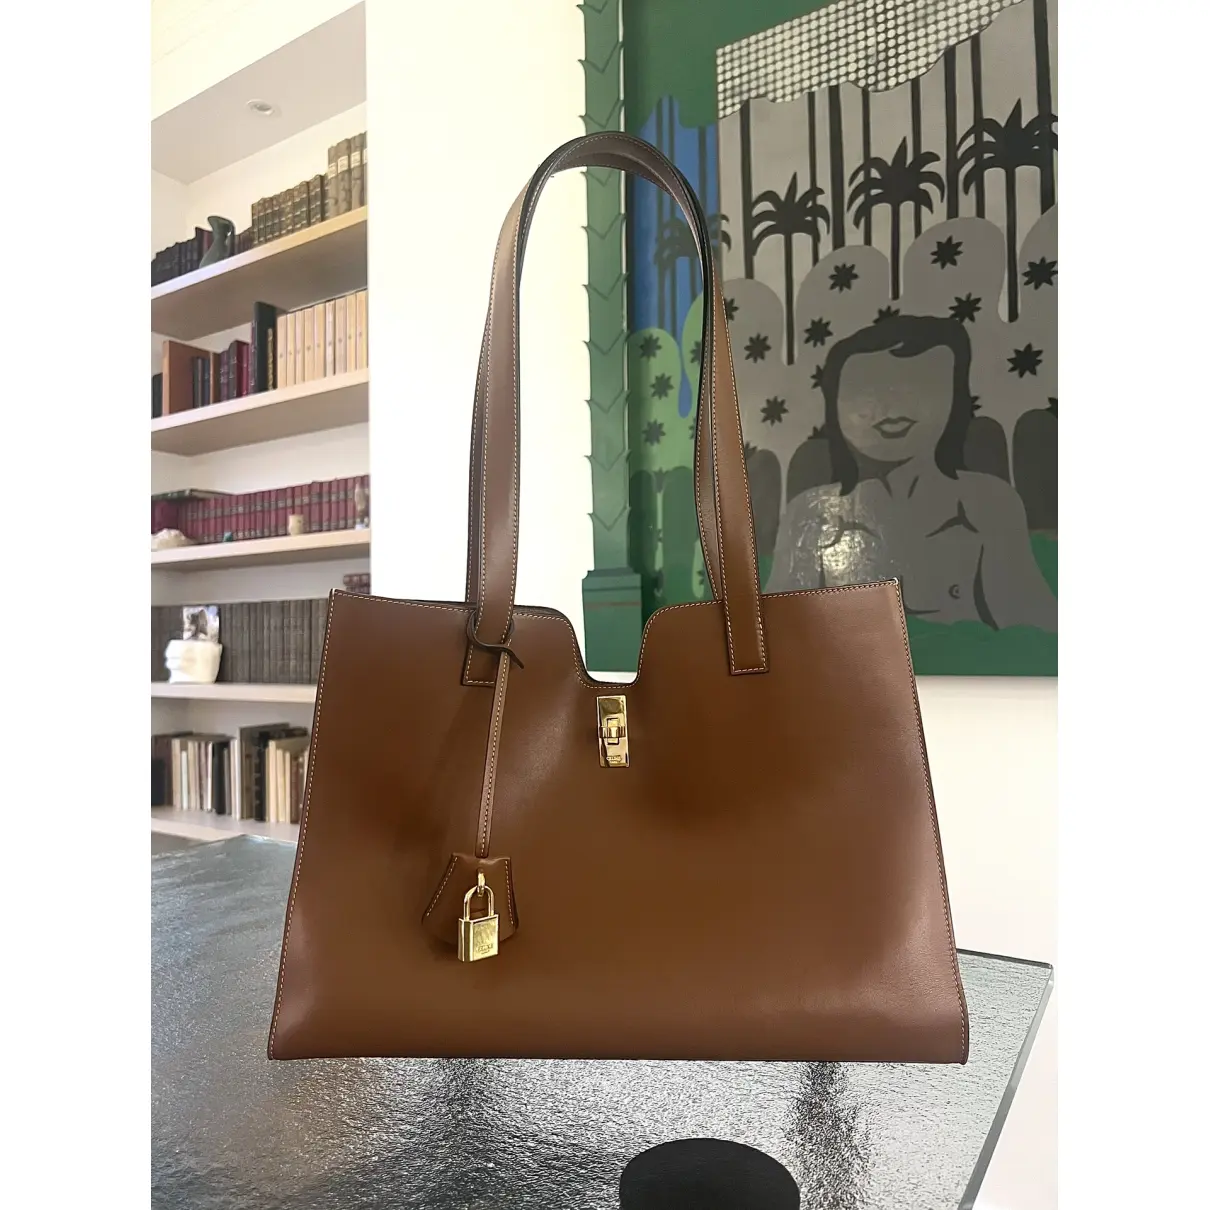 Buy Celine Sac 16 leather tote online